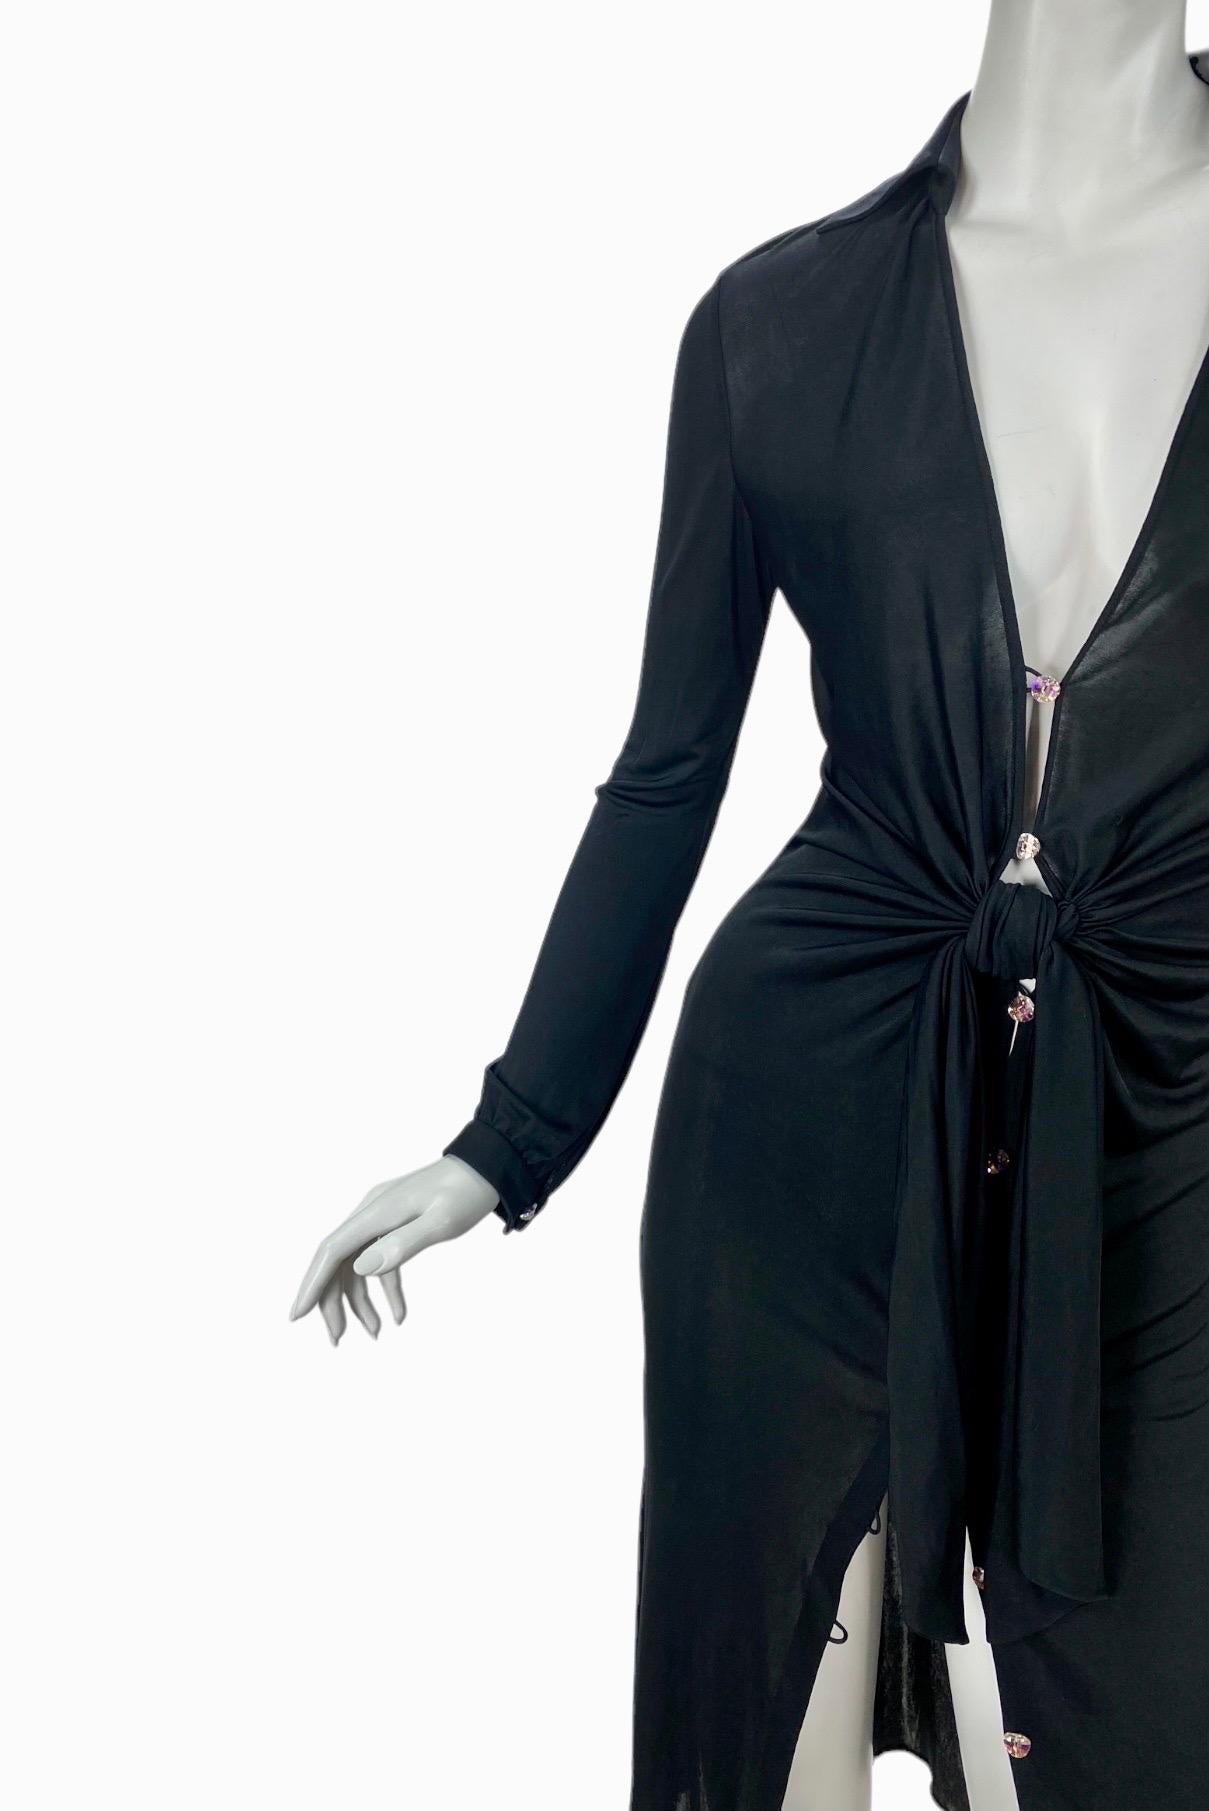 S/S 2000 Vintage Gianni Versace Couture Runway Black Deep V-Neck Dress For Sale 2